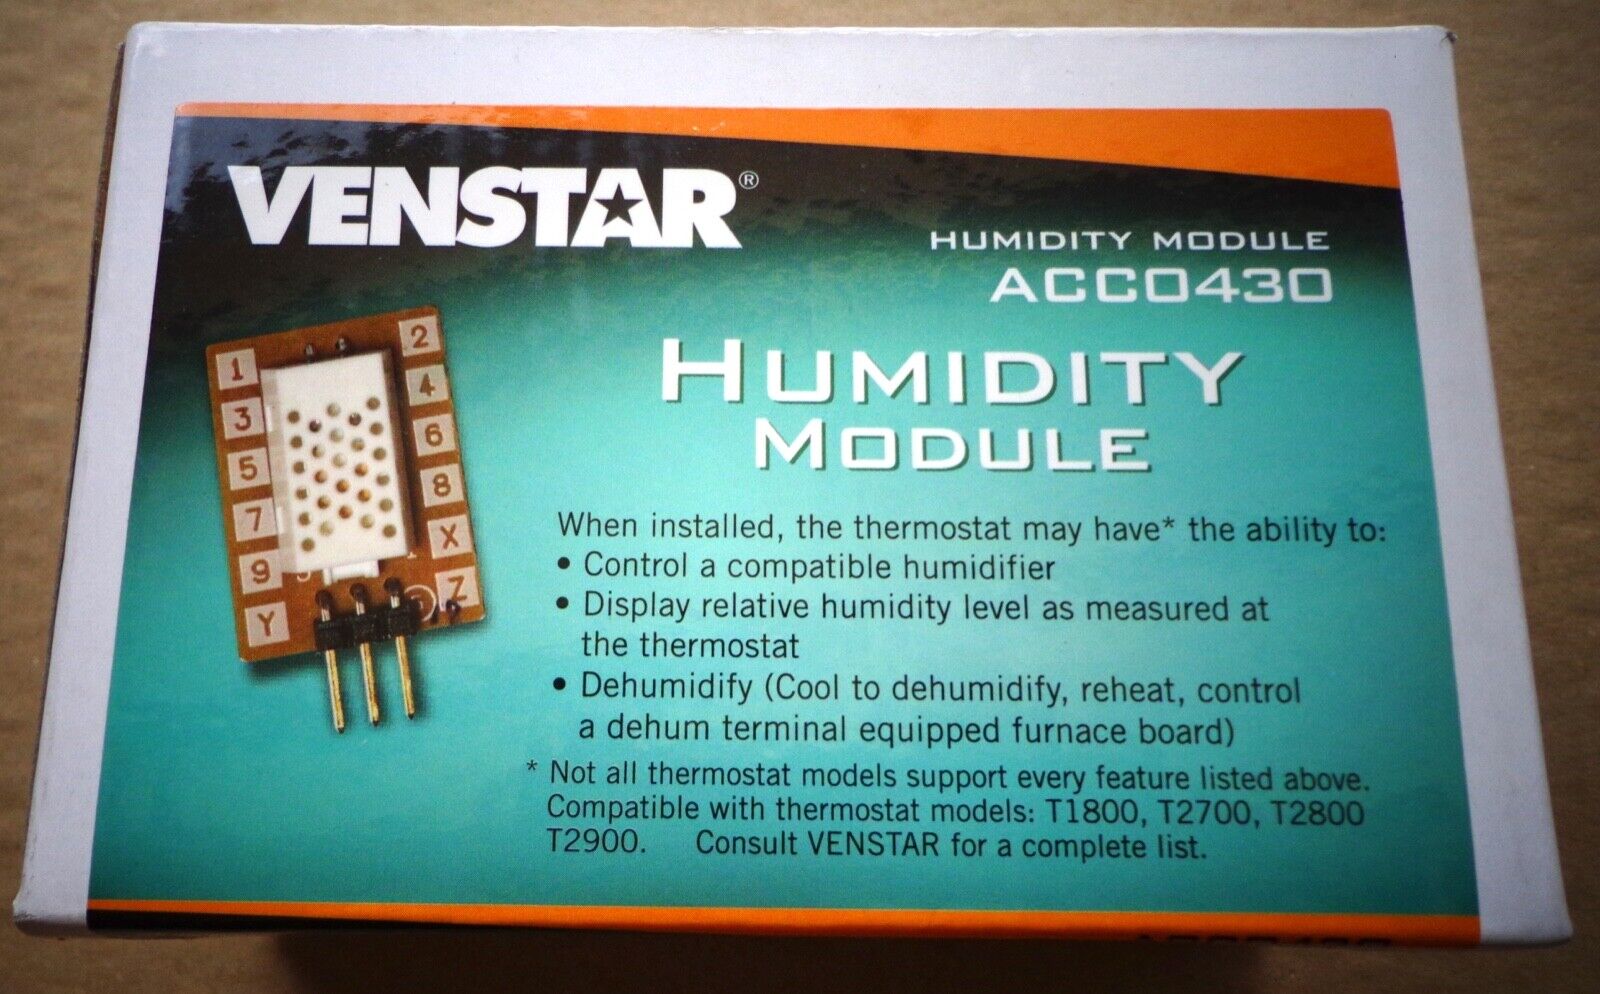 Venstar ACC0430 Humidity Module, Brand new